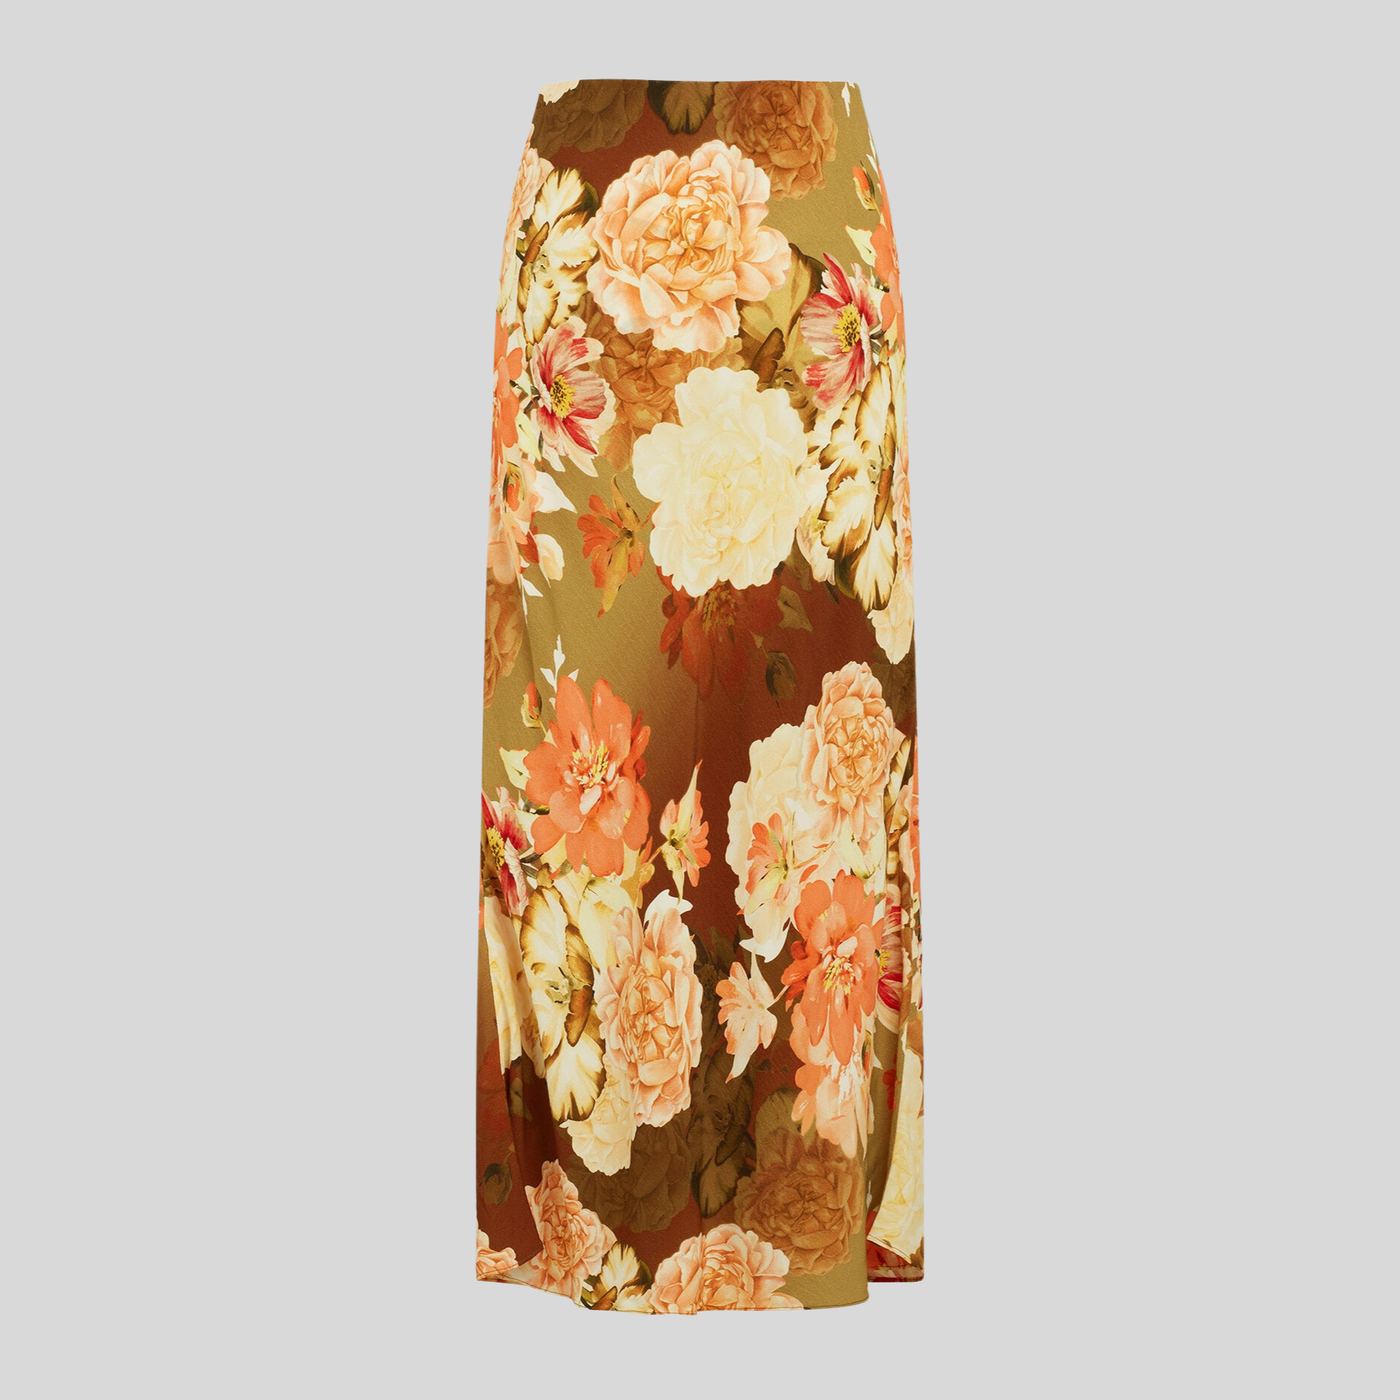 Gotstyle Fashion - Favorite Daughter Skirts Floral Print Bias Cut Crepe Midi Skirt - Multi